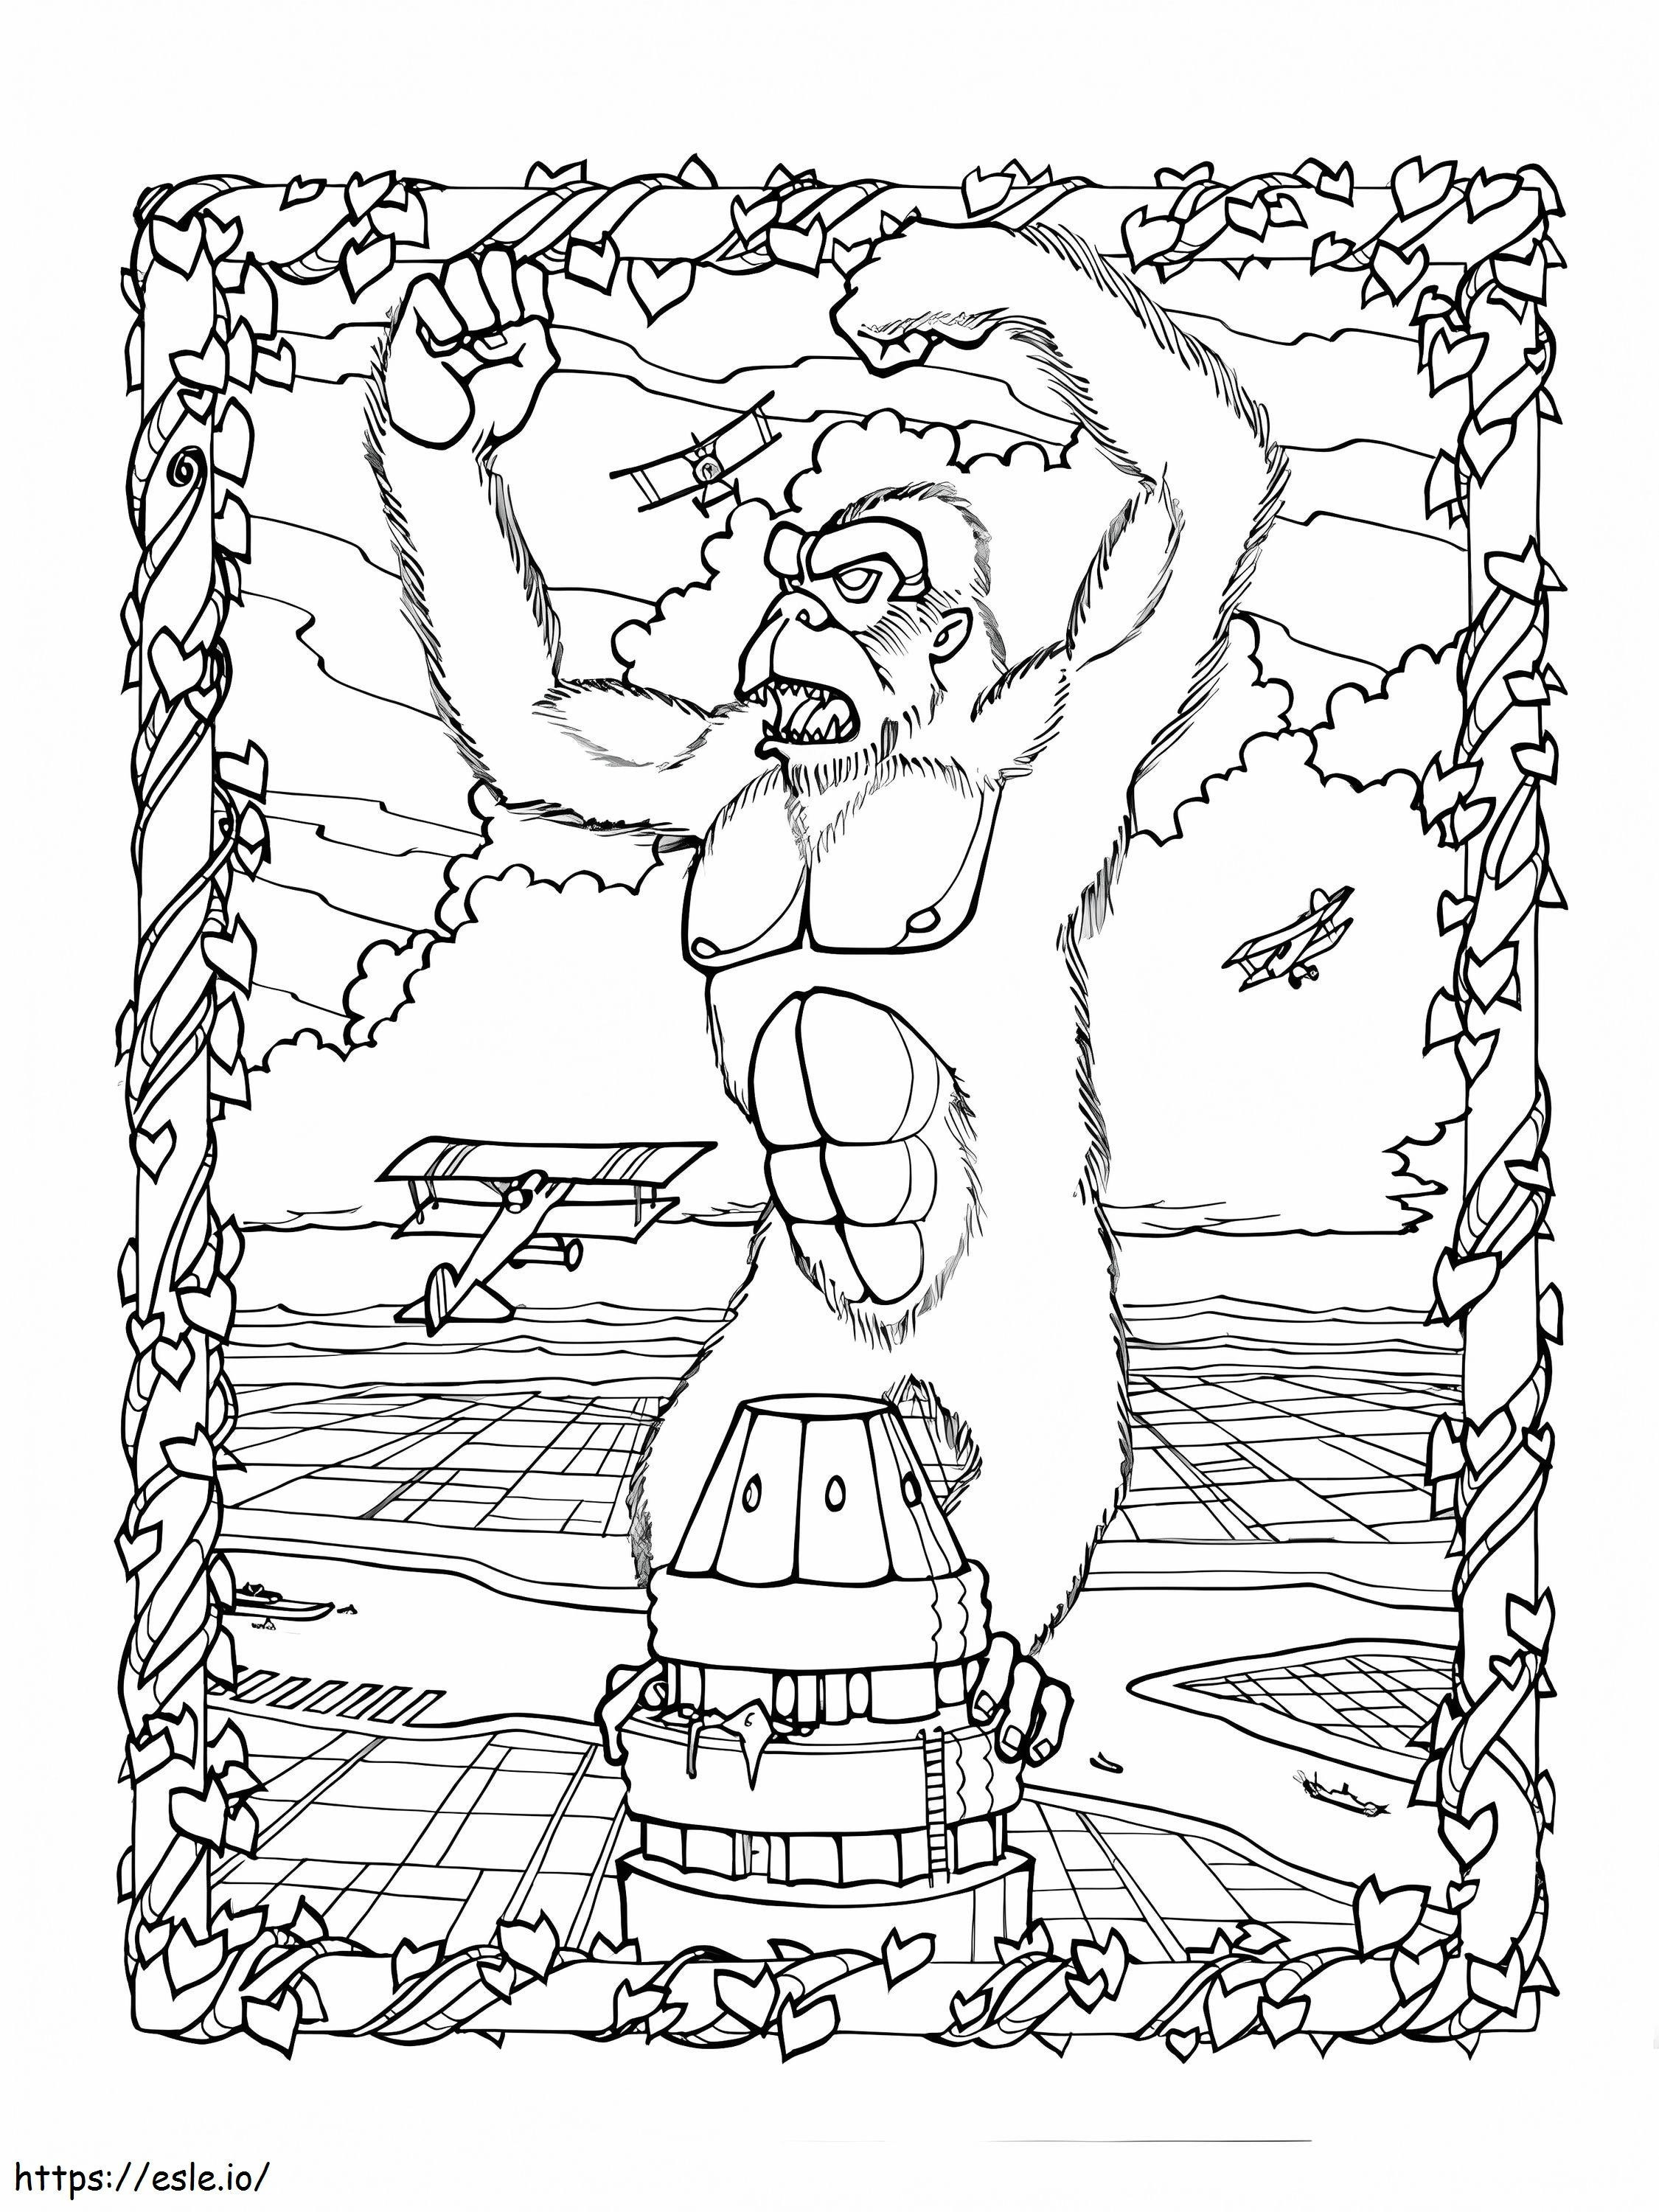 Angry King Kong 5 coloring page